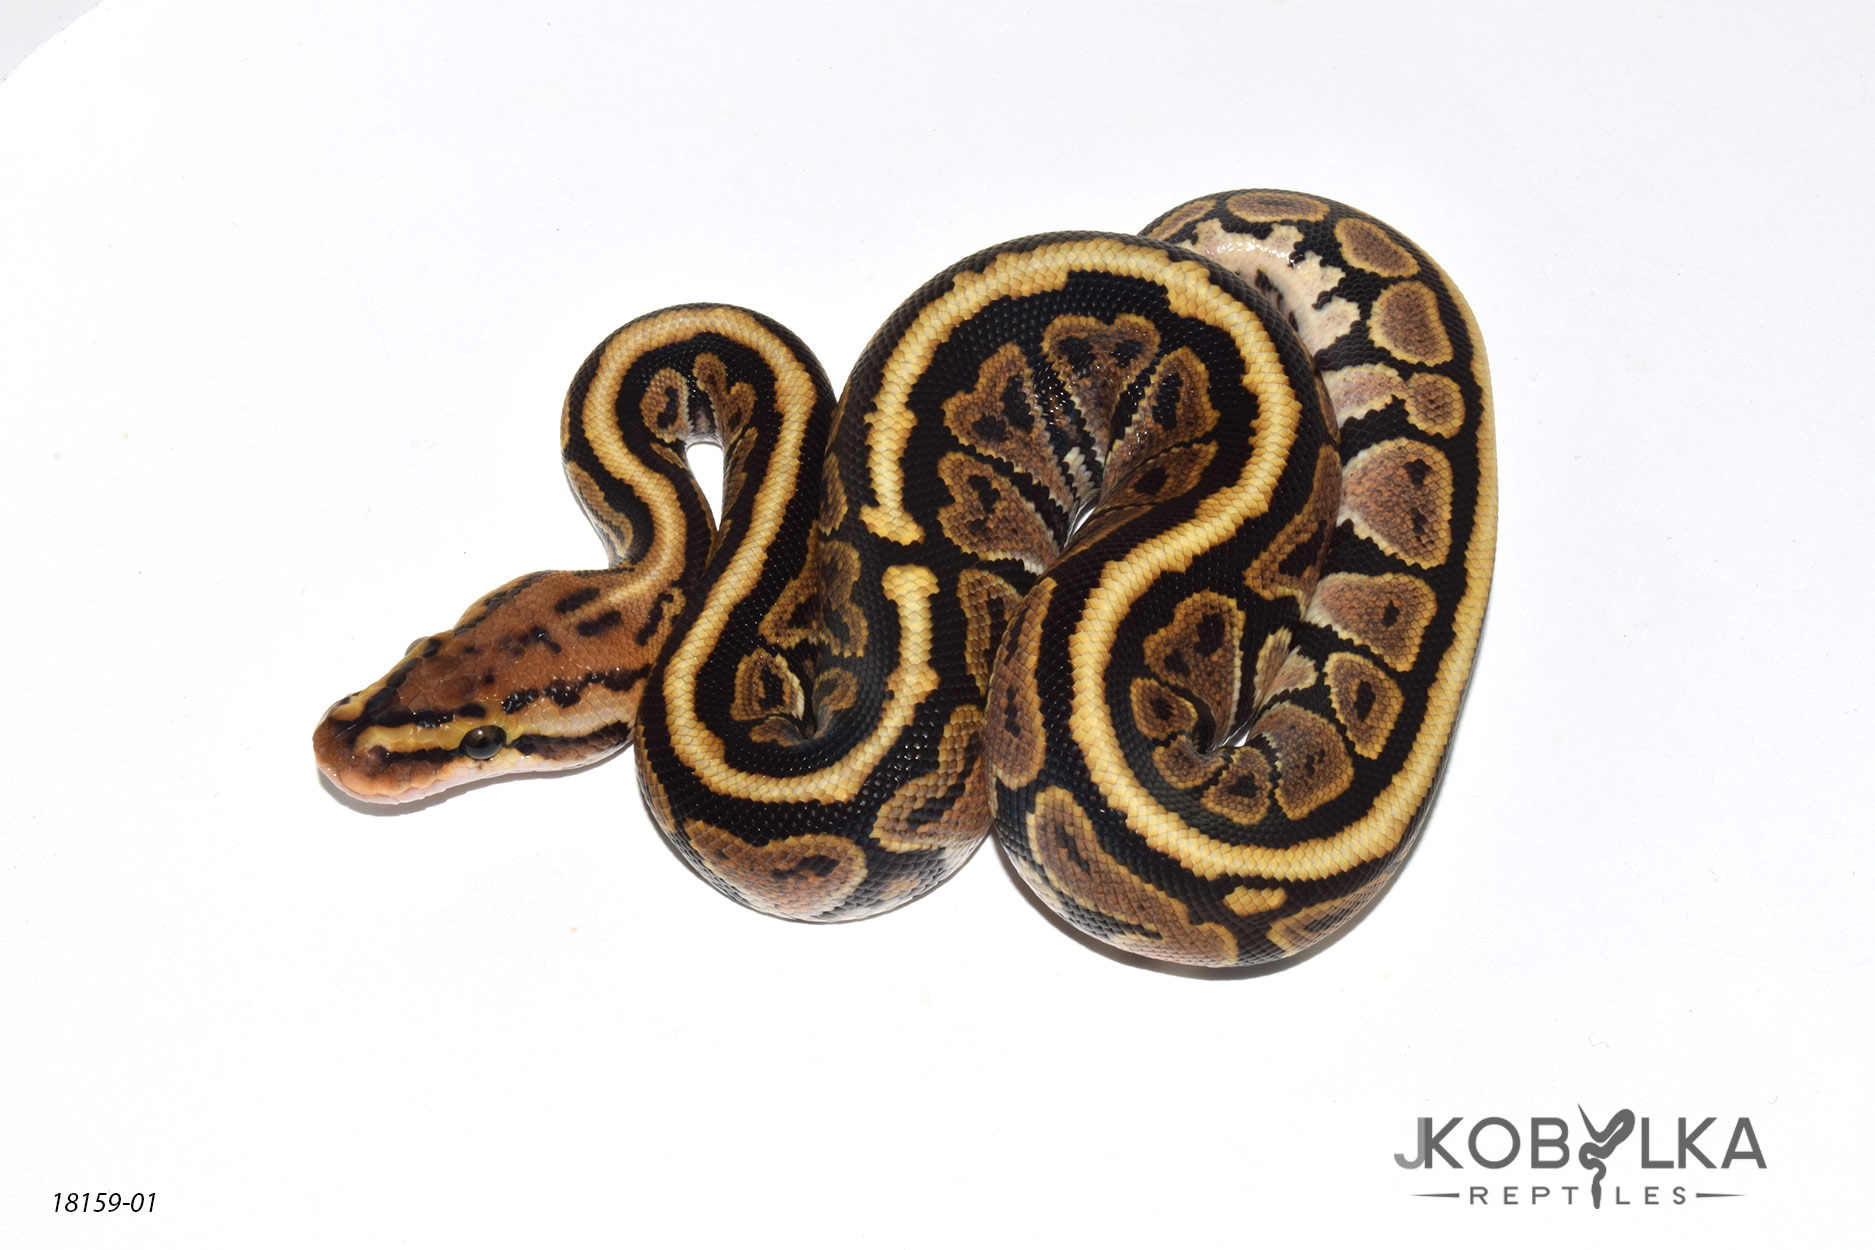 Mojave Spotnose Redhead Ball Python by J.Kobylka Reptiles